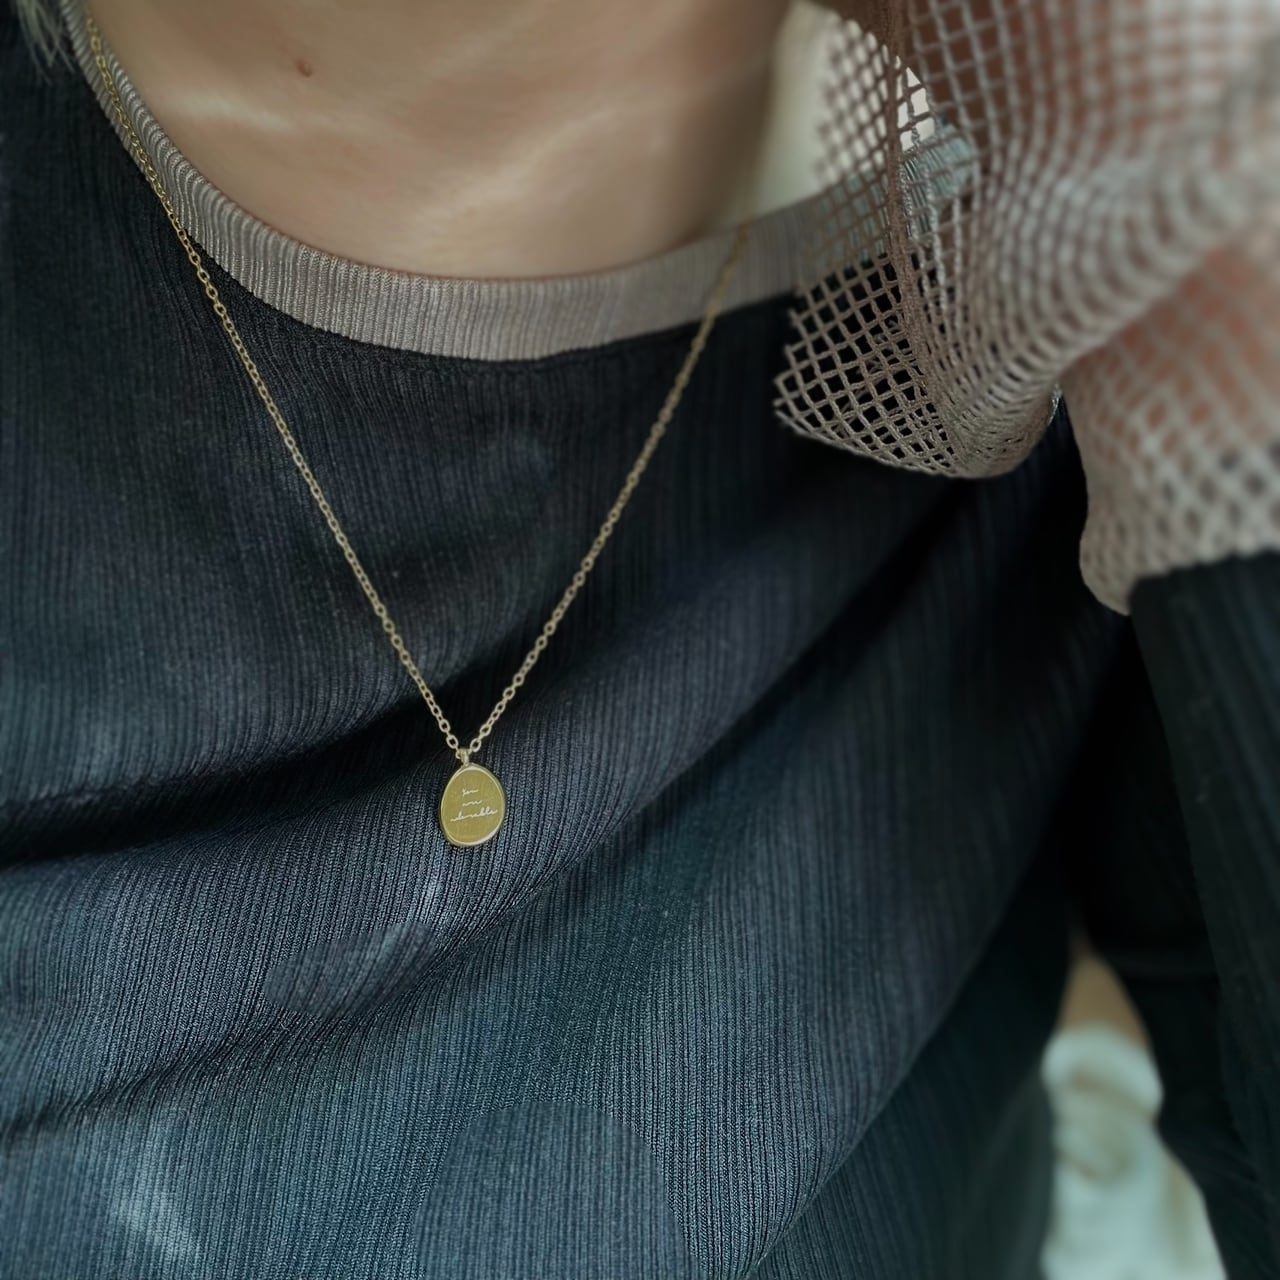 18KGP coin pendant necklace (ステンレスネックレス/チェーン